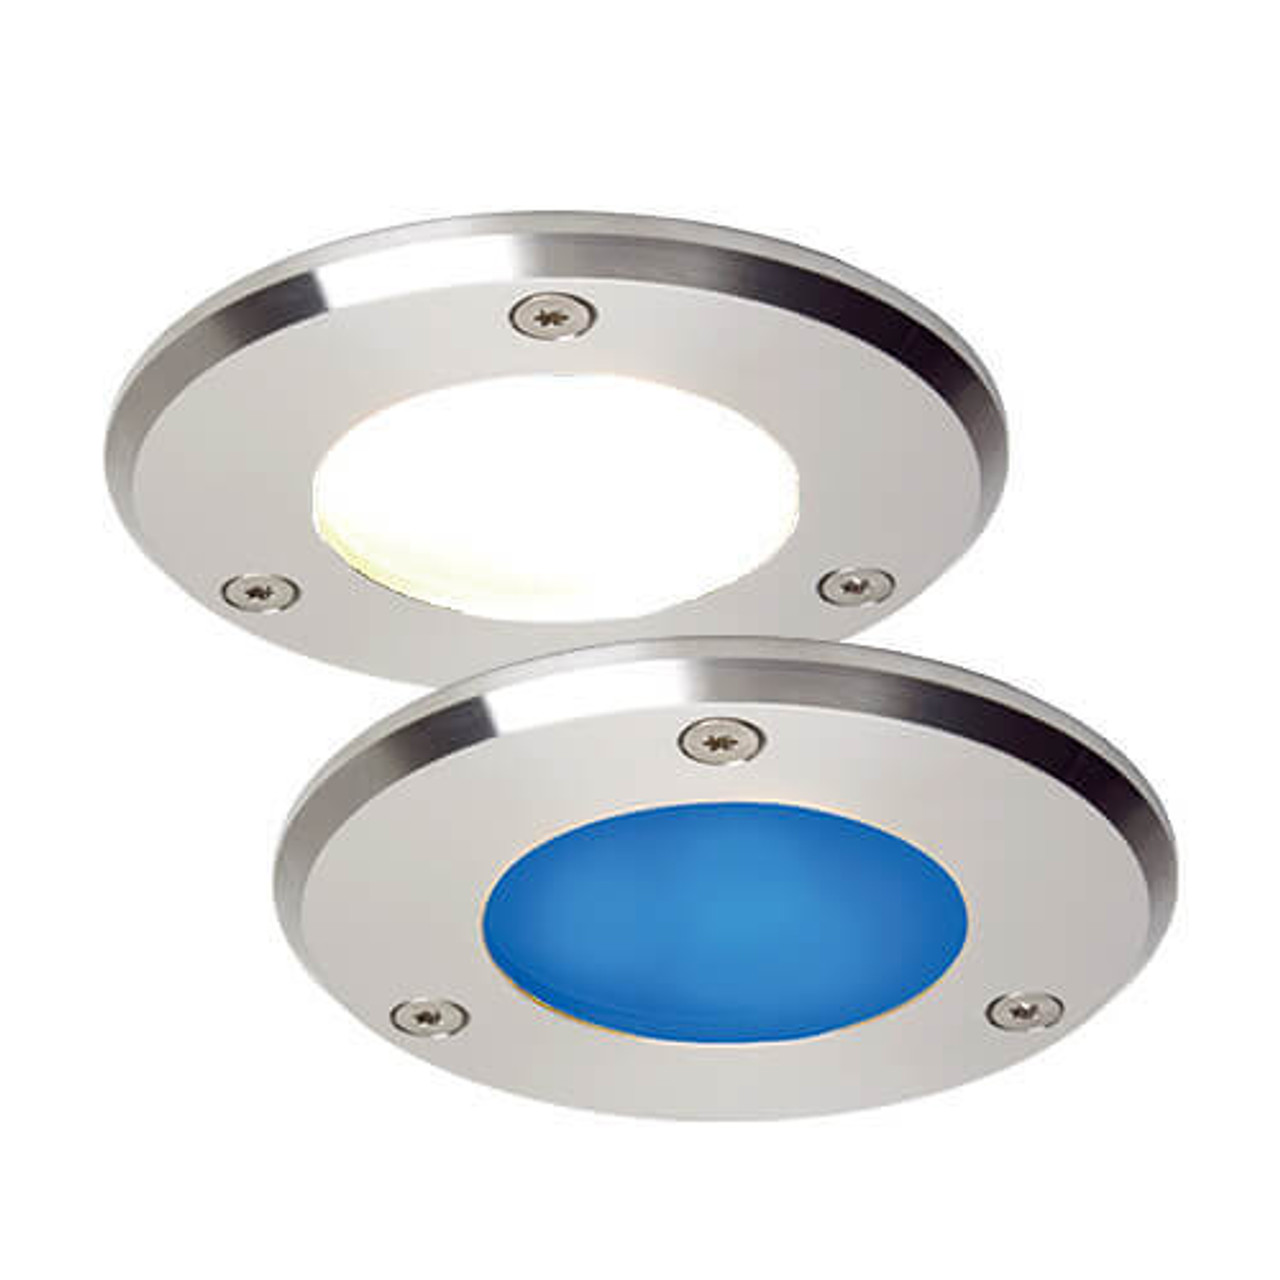 Imtra - Emden-Medium LED Downlight - Stainless Steel, Warm White/Blue, 10-30VDC, IP67, 3.0W (ILPB23303705) - Apollo Lighting